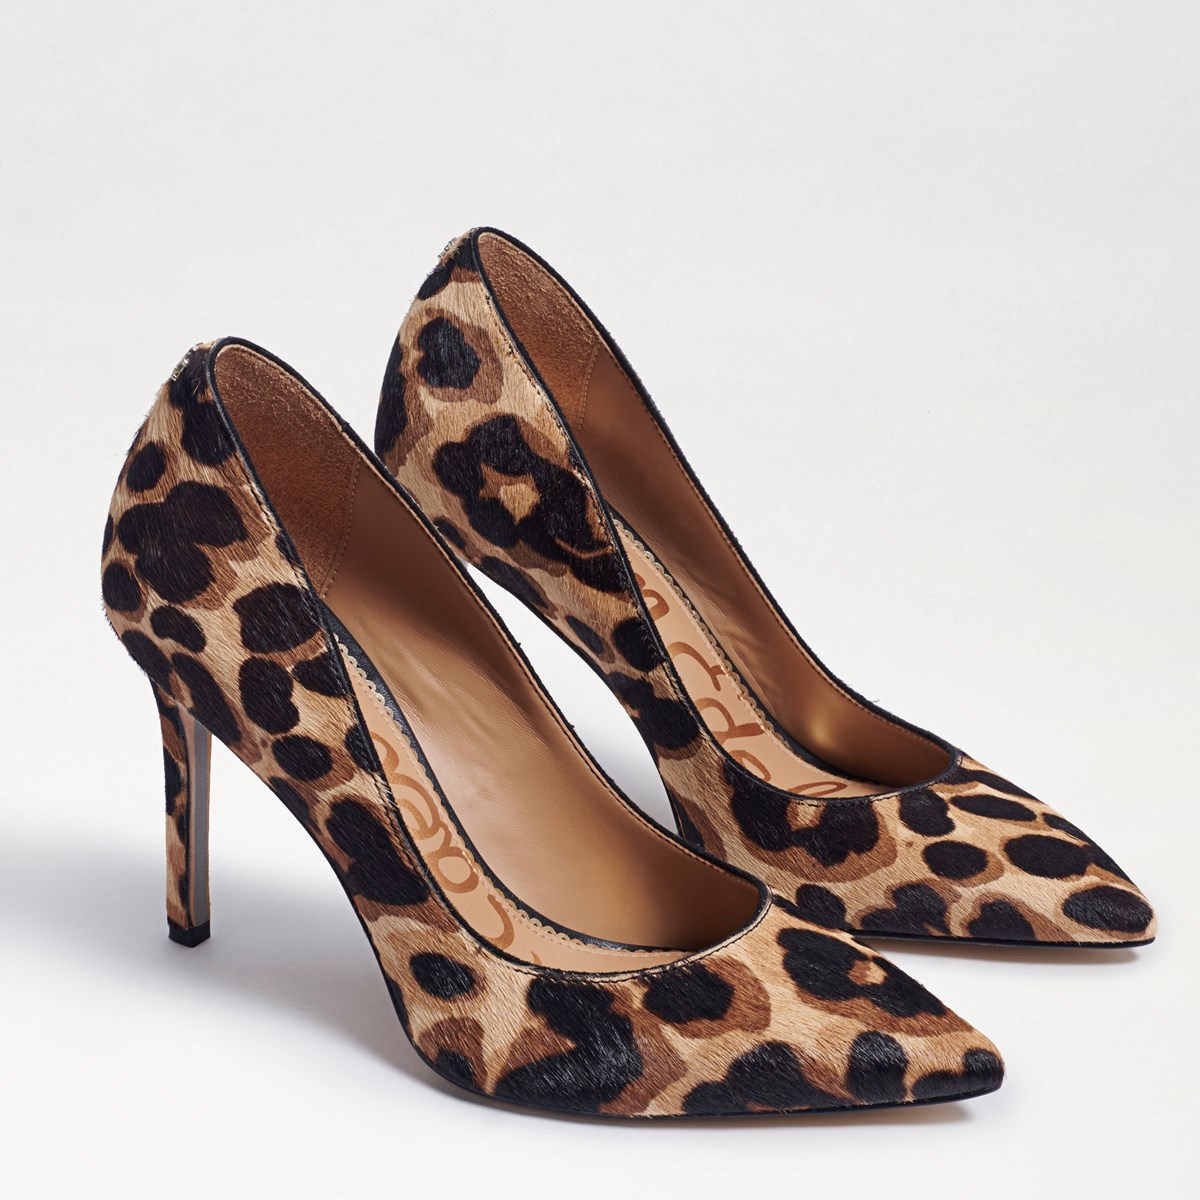 Buy > sam edelman patent leather heels > in stock